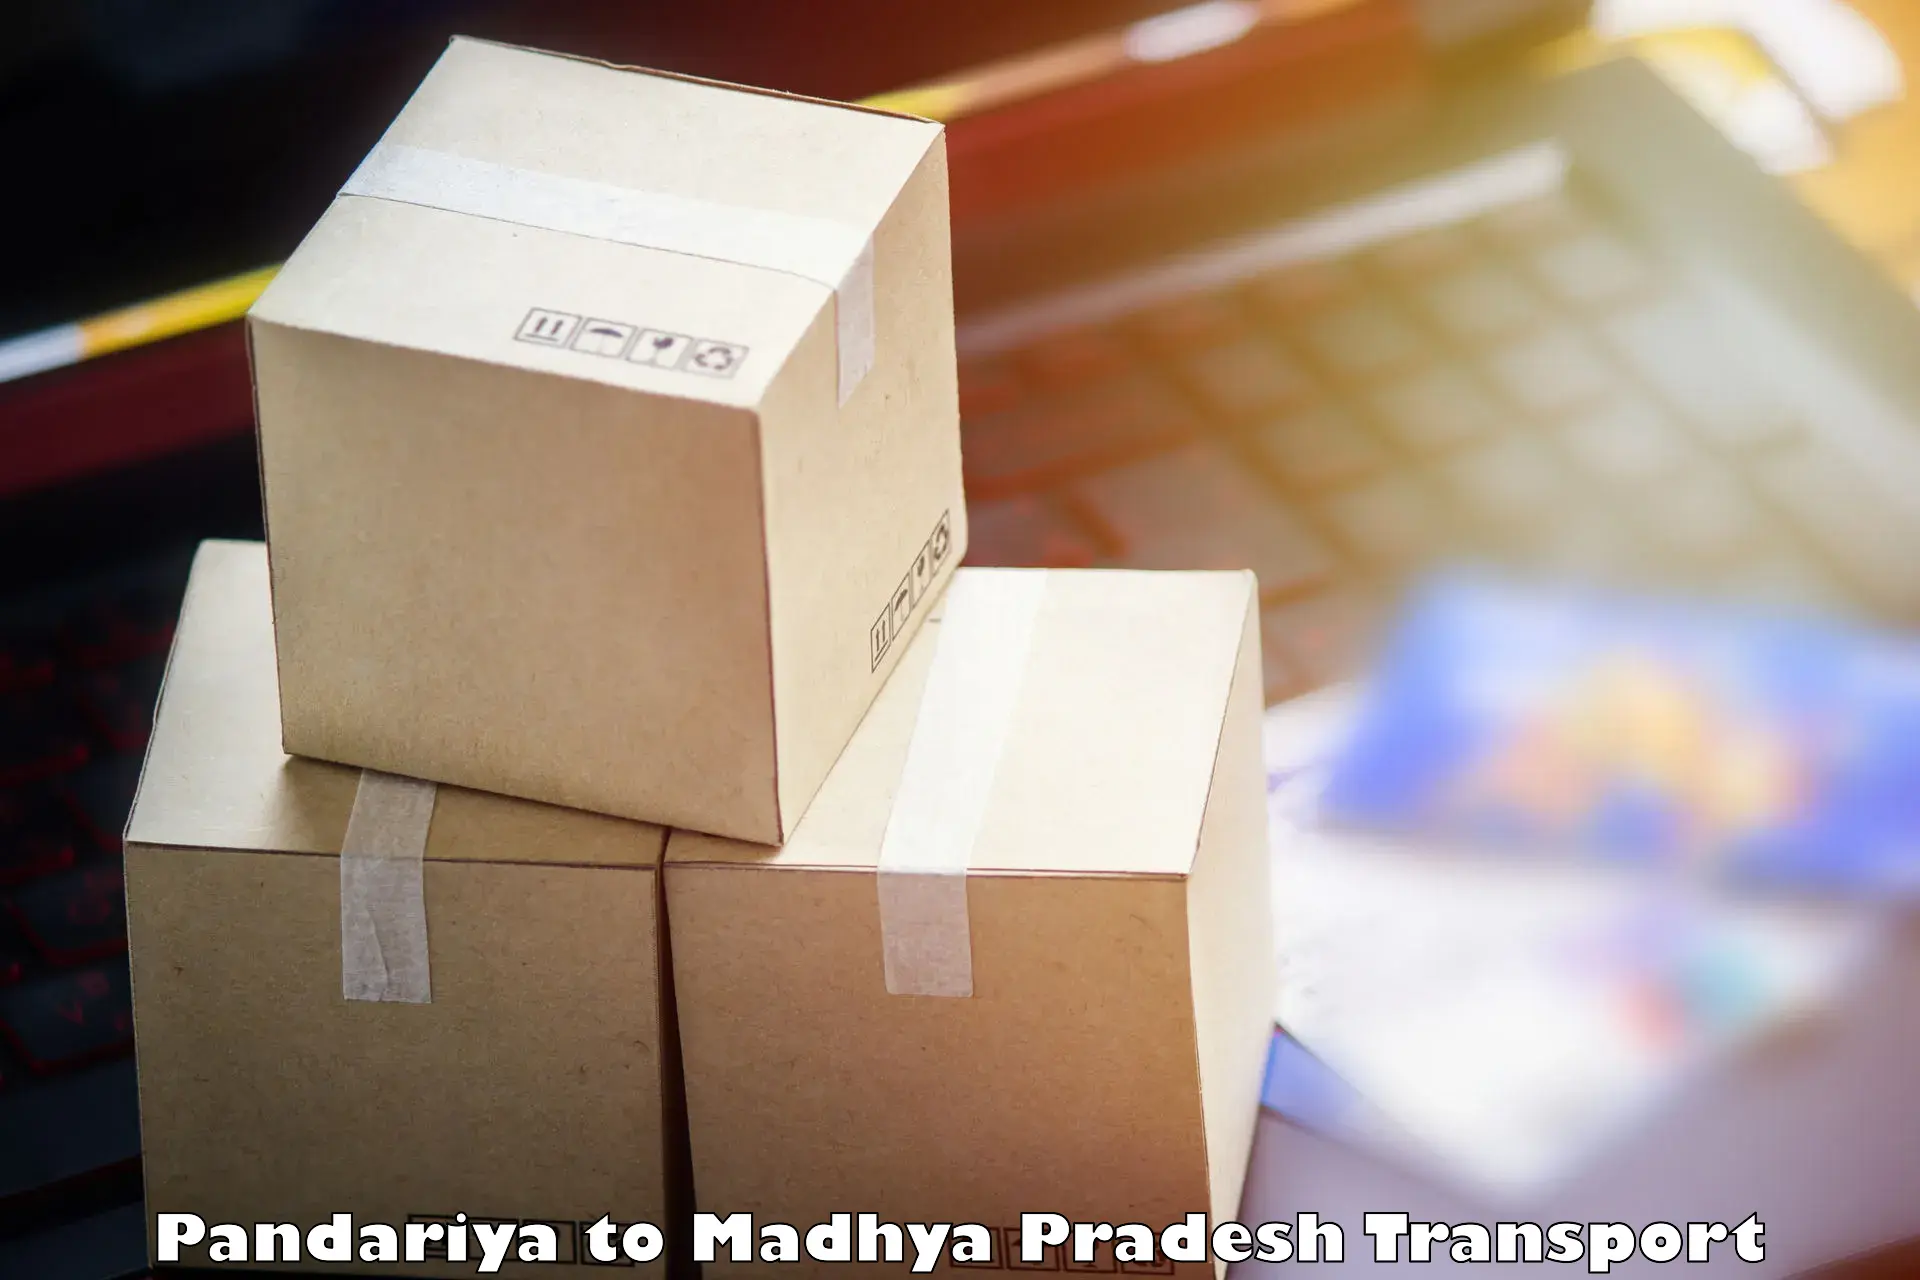 Nearby transport service Pandariya to Dhar